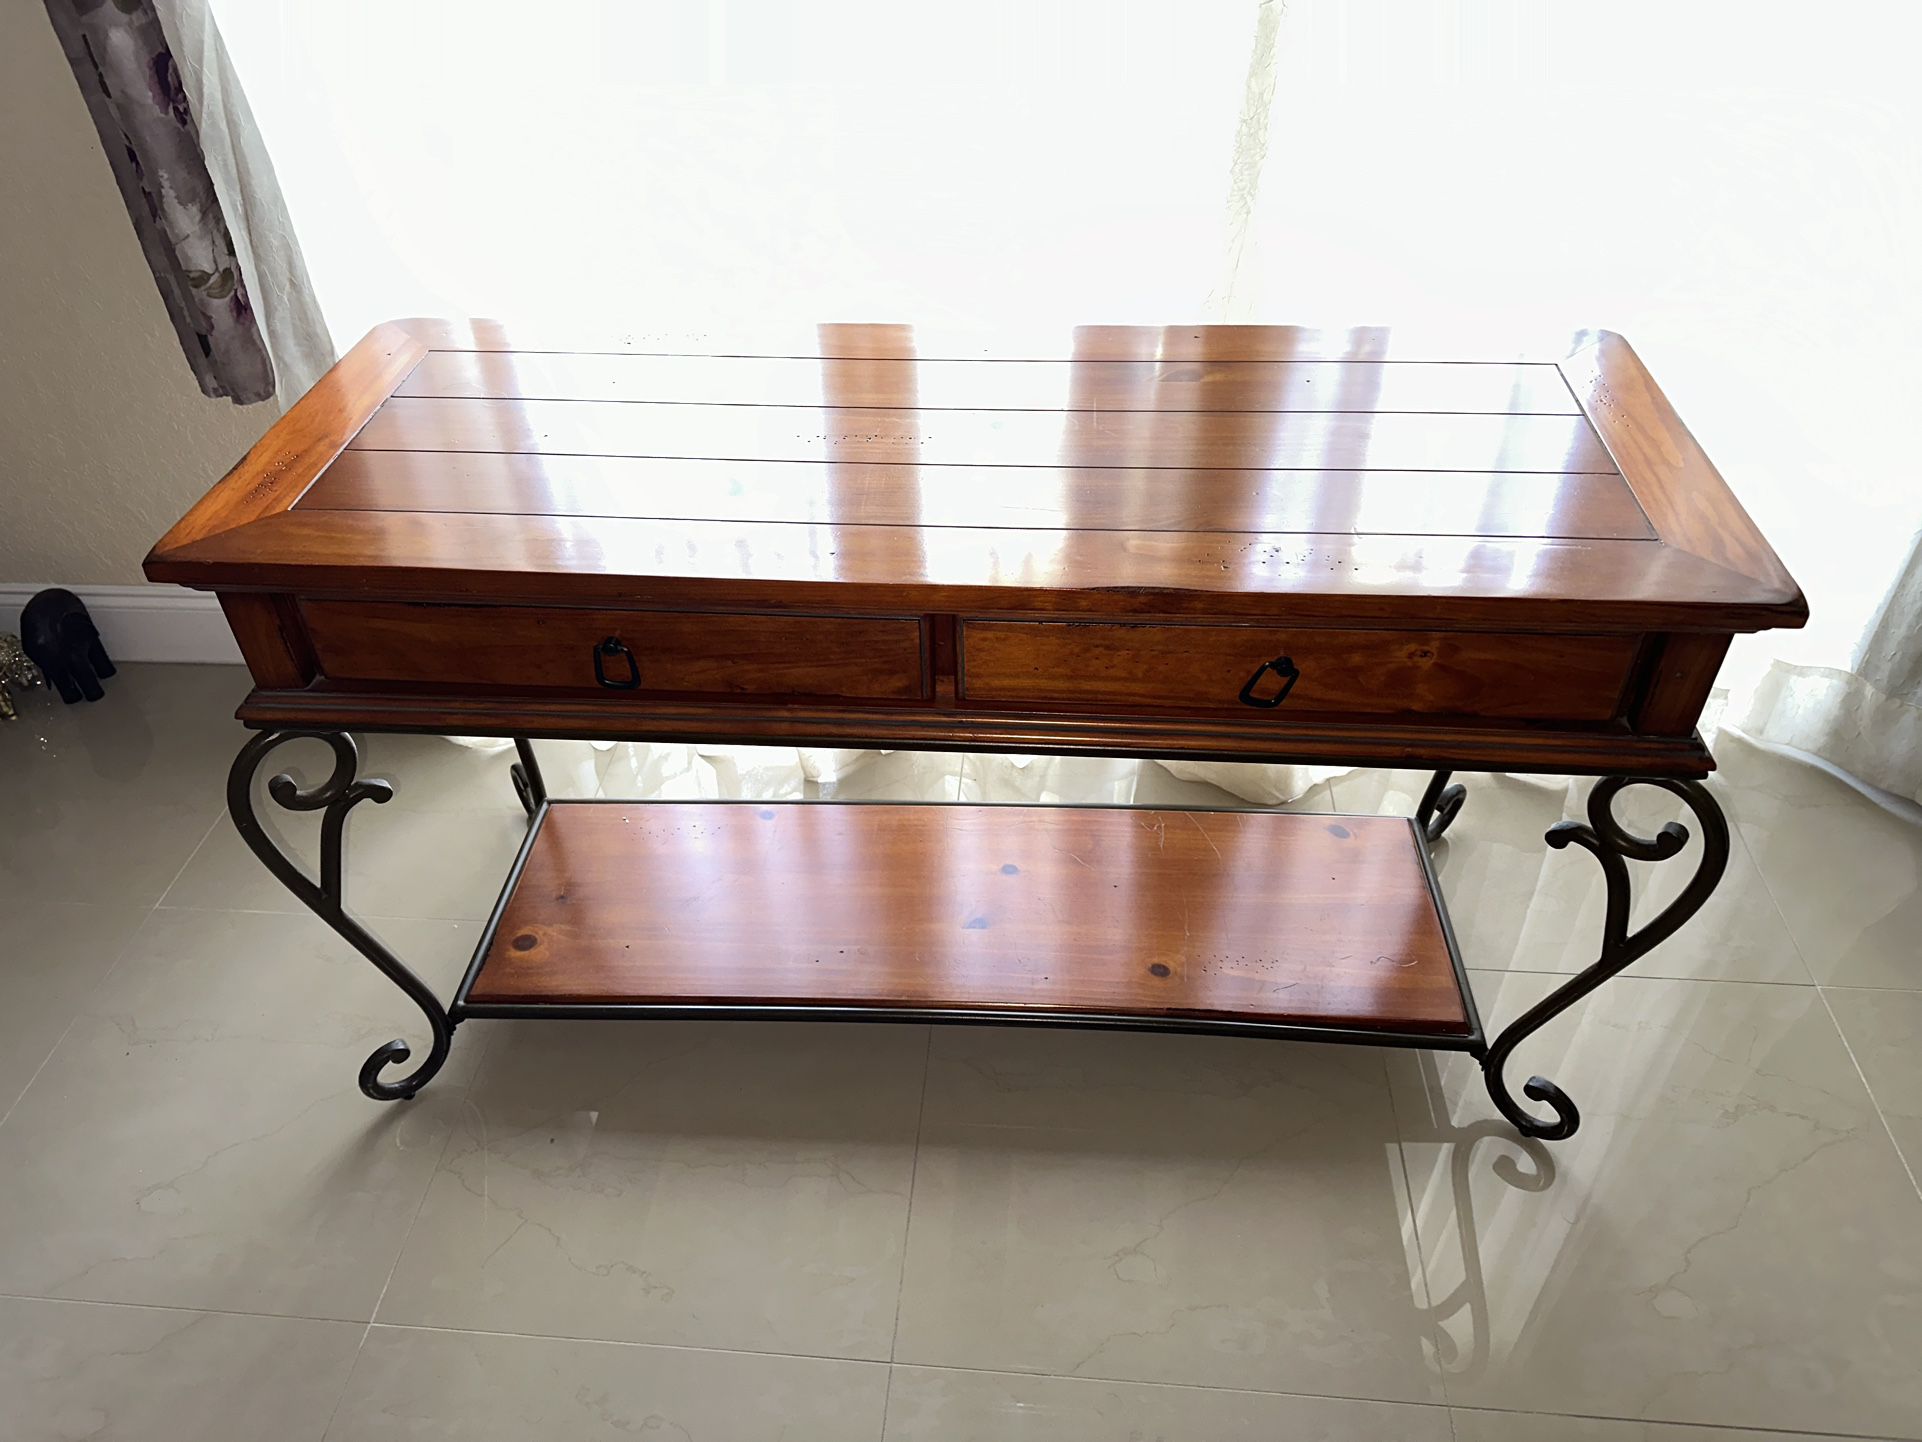 Antique Wood And Iron Table - Mesa Antigua De Madera Y Hierro